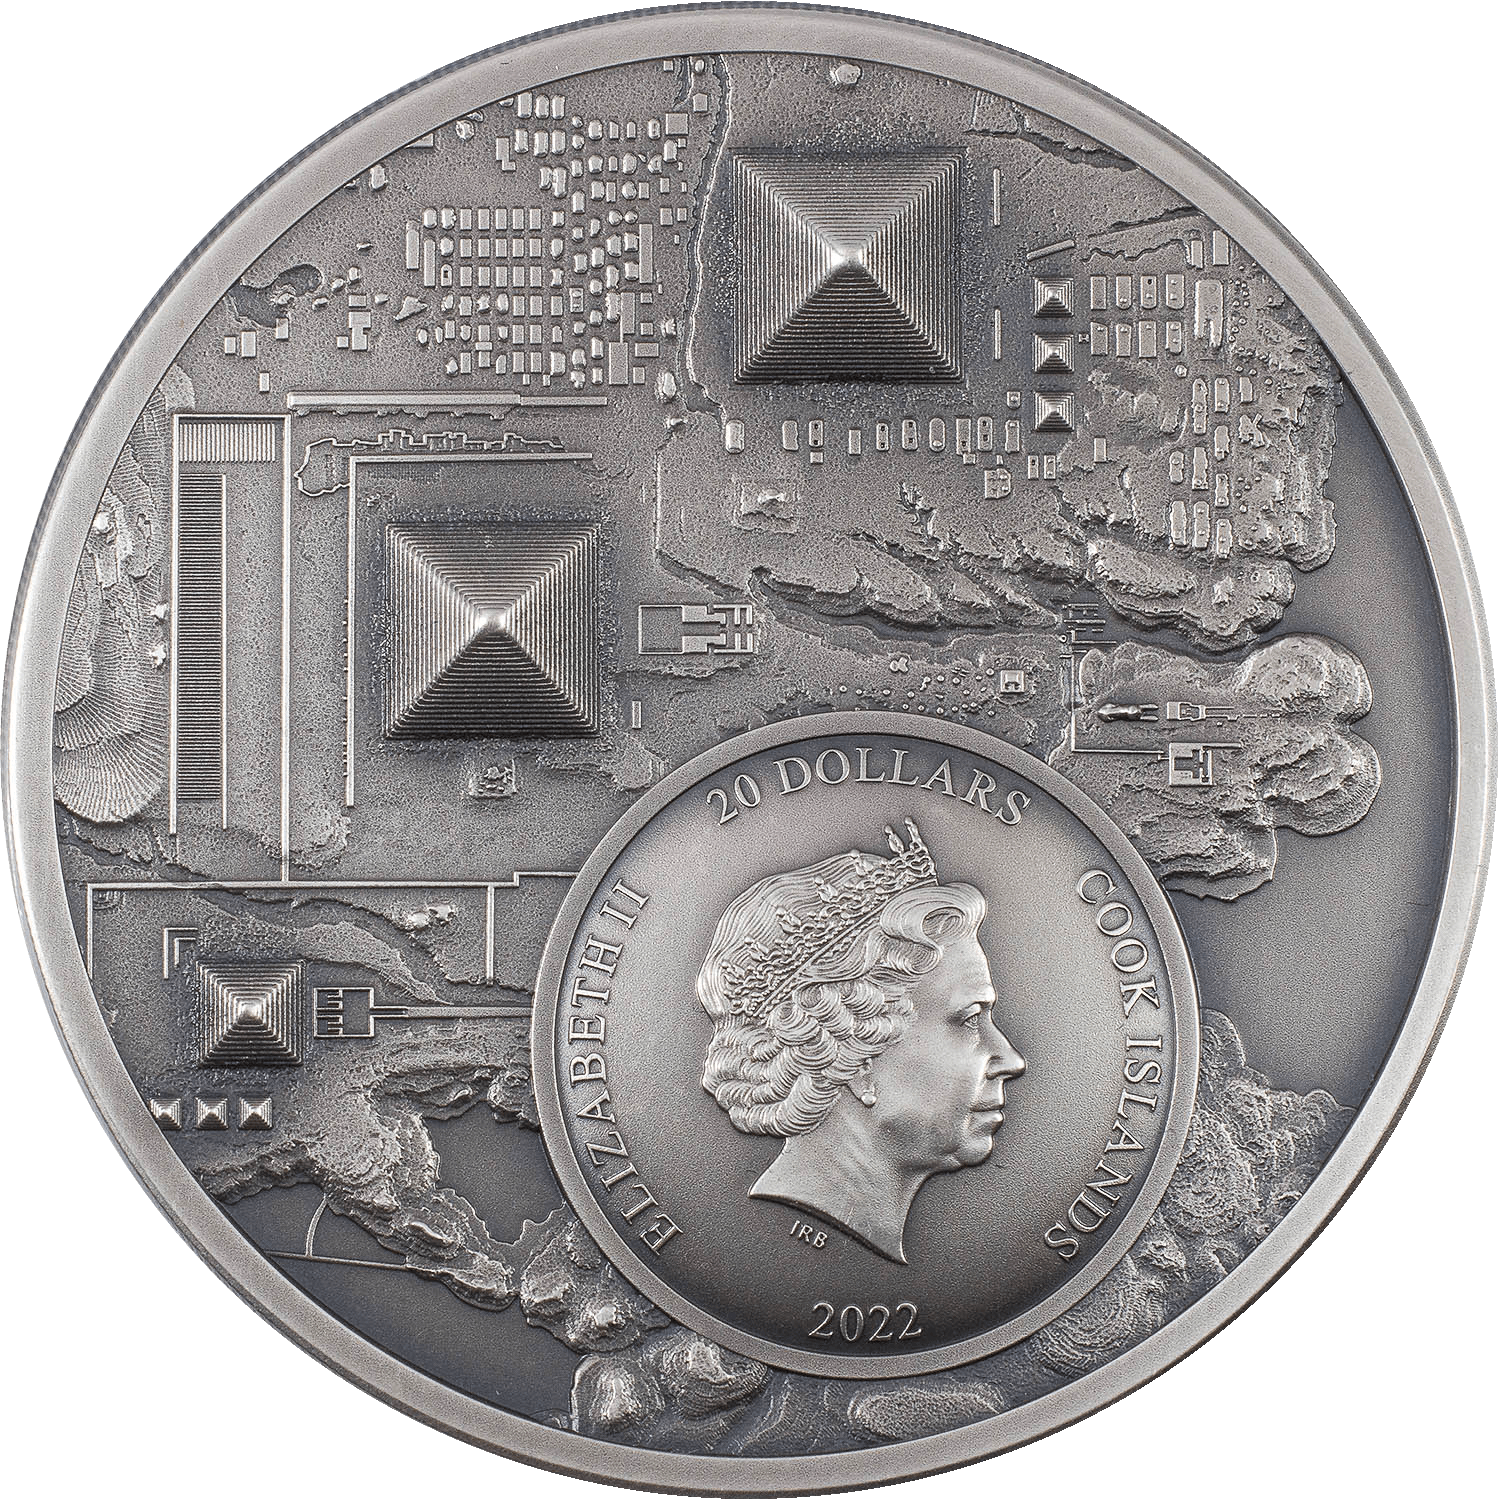 LEGACY OF THE PHARAOHS Antique 3 Oz Silver Coin $20 Cook Islands 2022 - PARTHAVA COIN